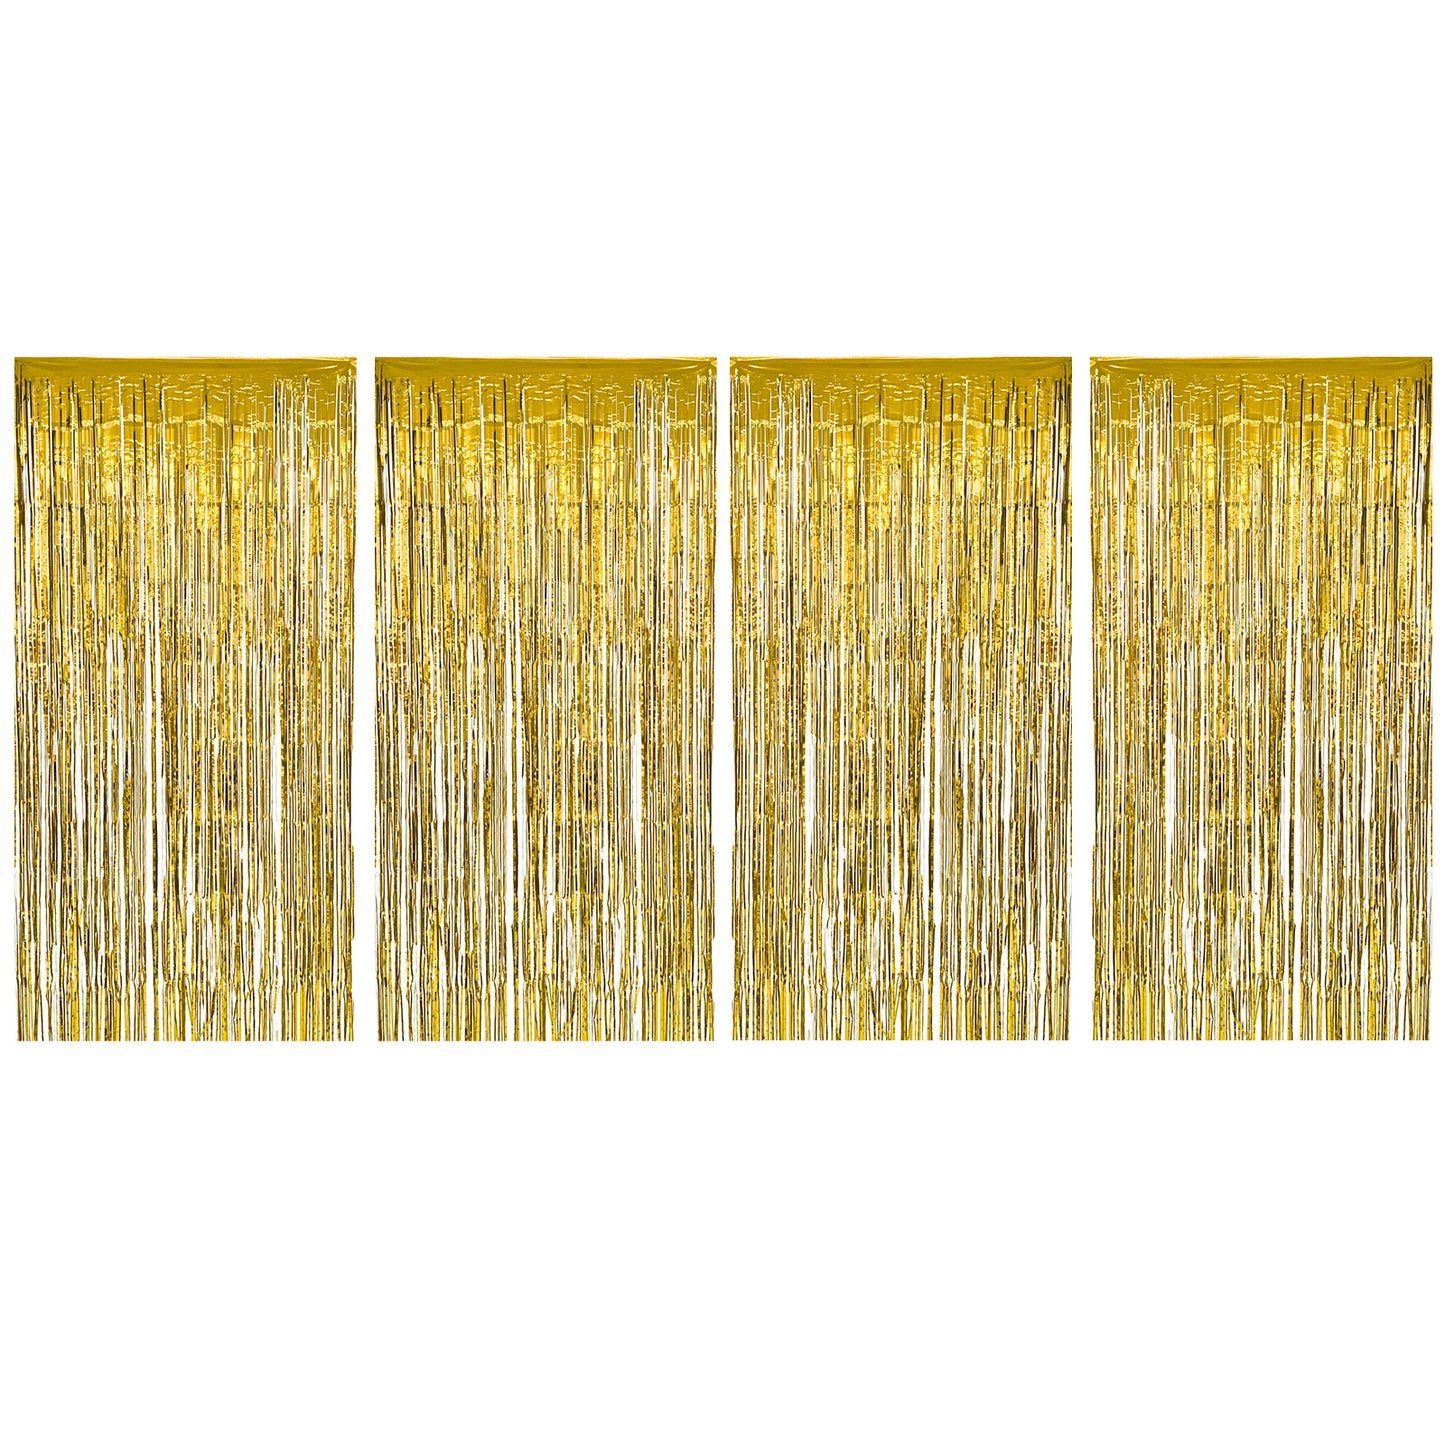 Allgala Tinsel Backdrop 4PK 6.5FT x 3.2FT (2Mx1M) Metallic Photo Backdrop Curtains Door Fringe Decor